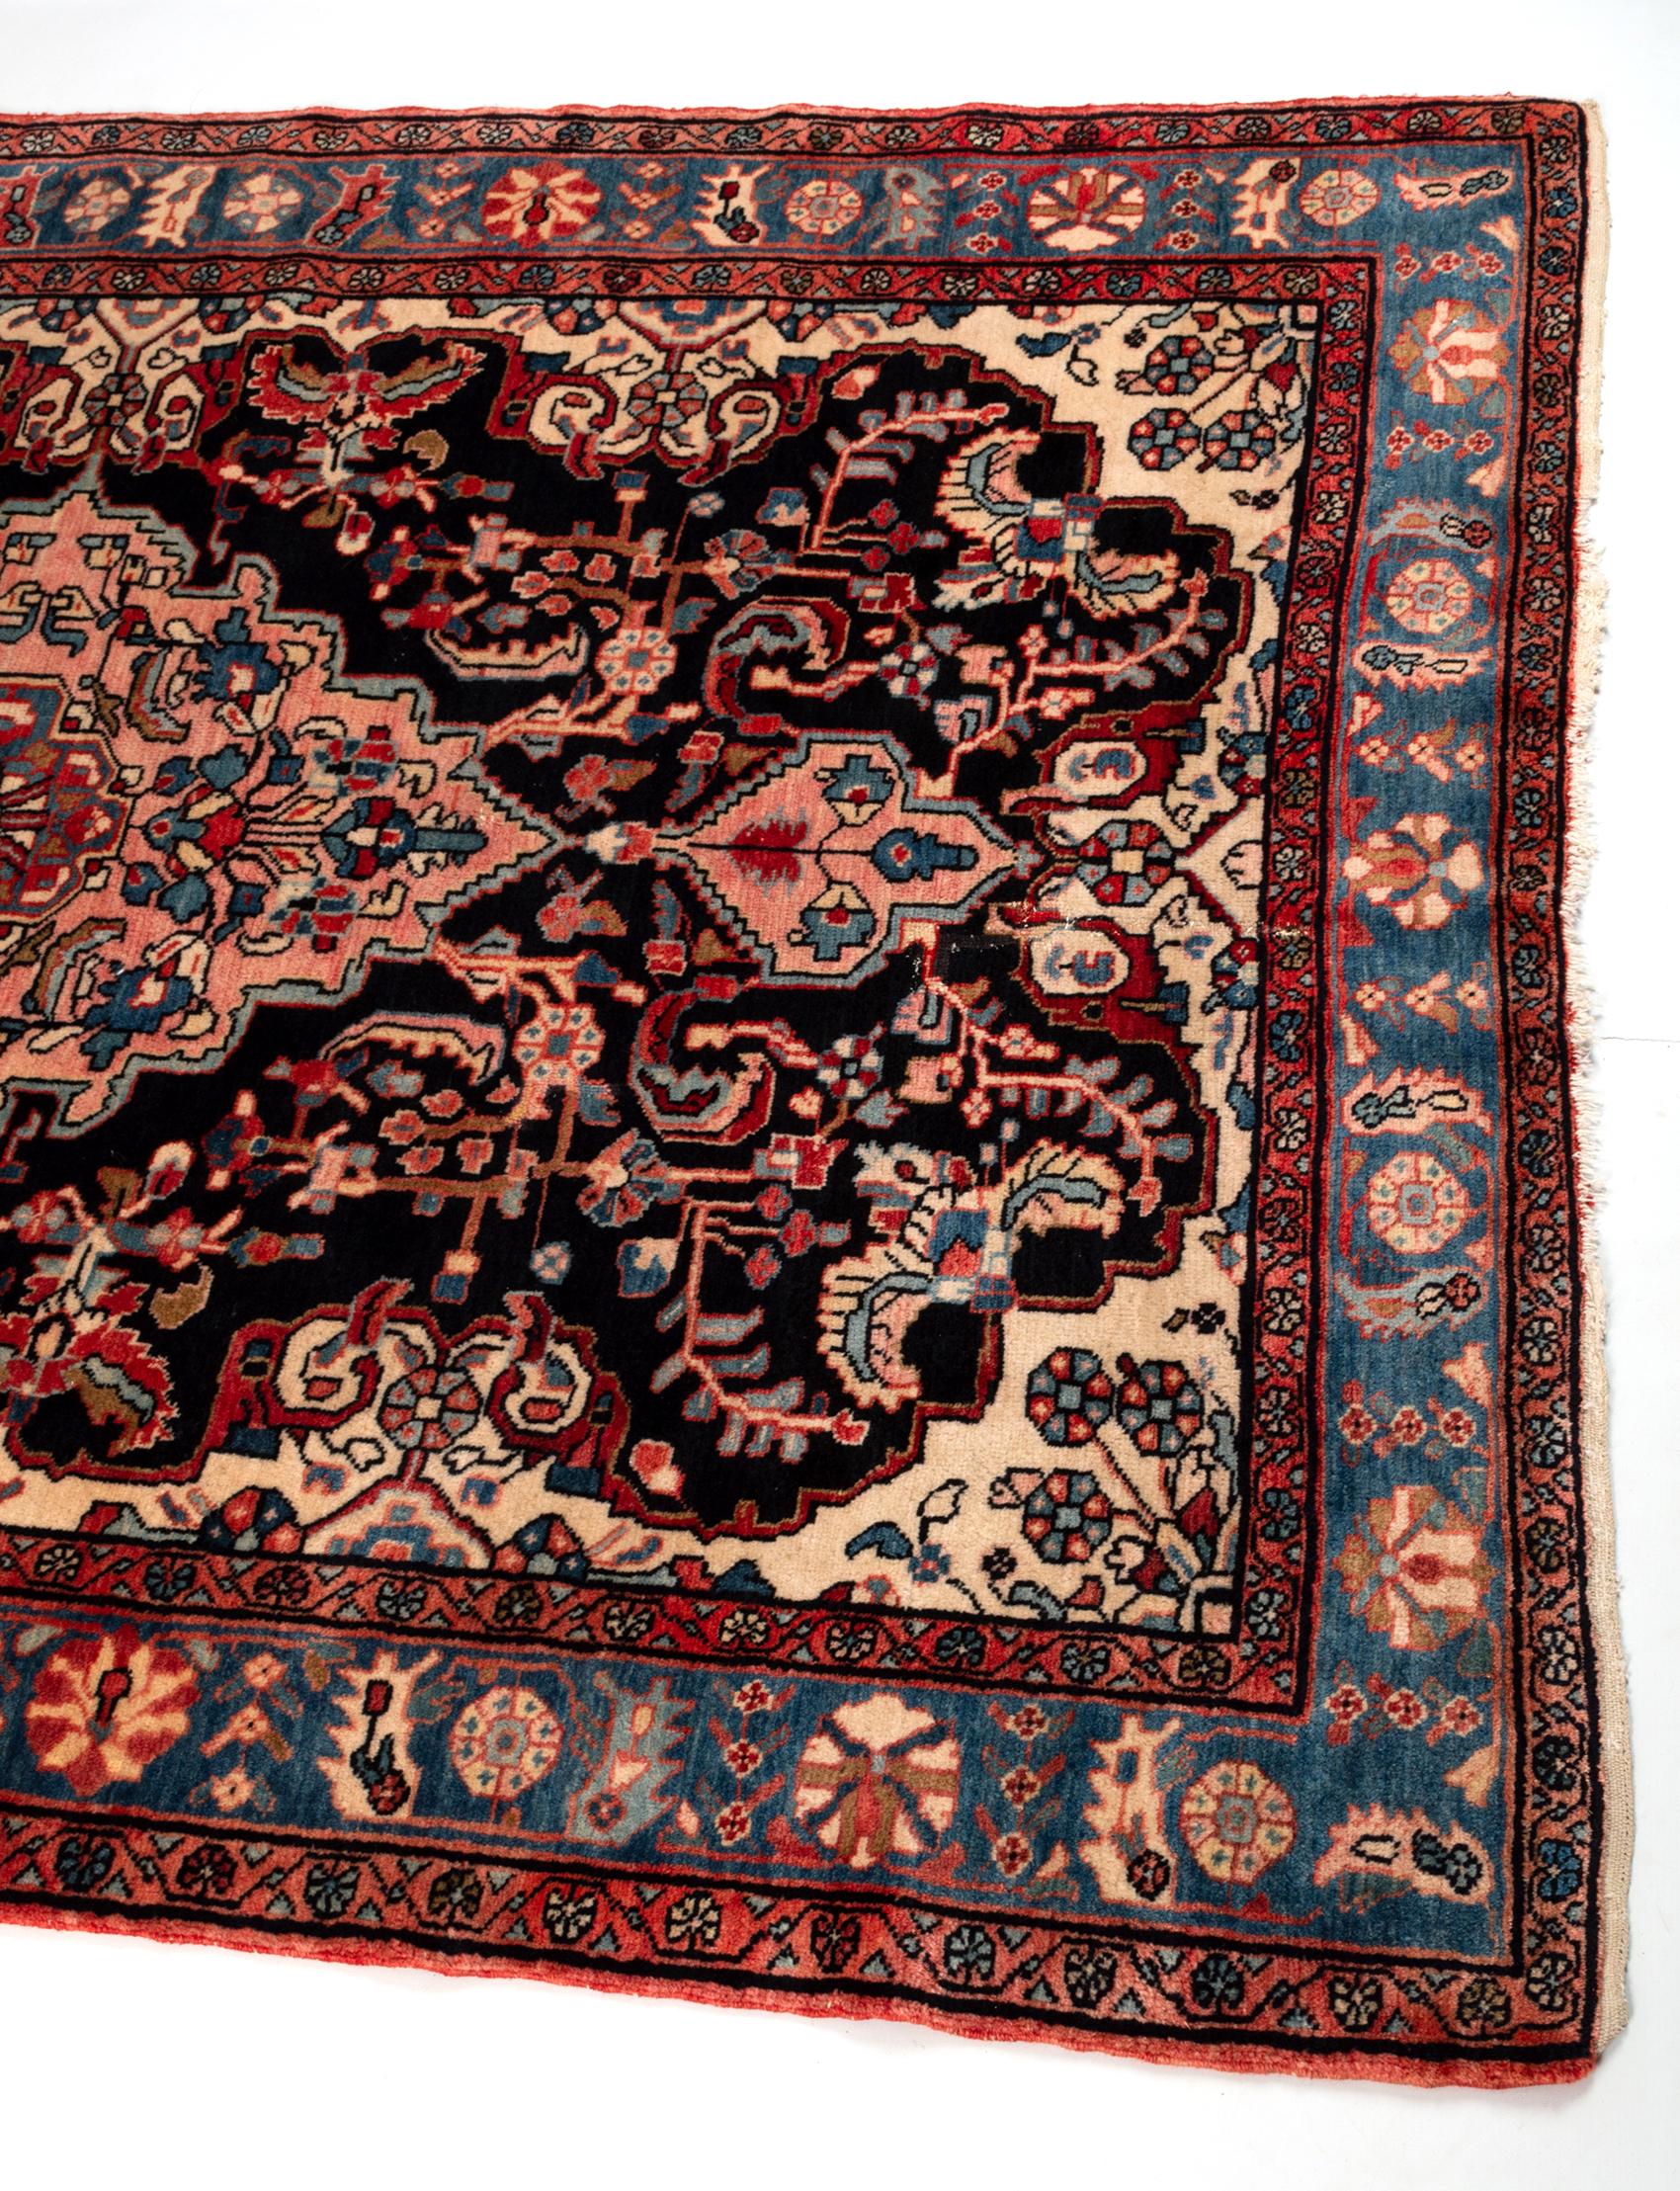 Central Asian Antique Fine West Persian Carpet Rug For Sale